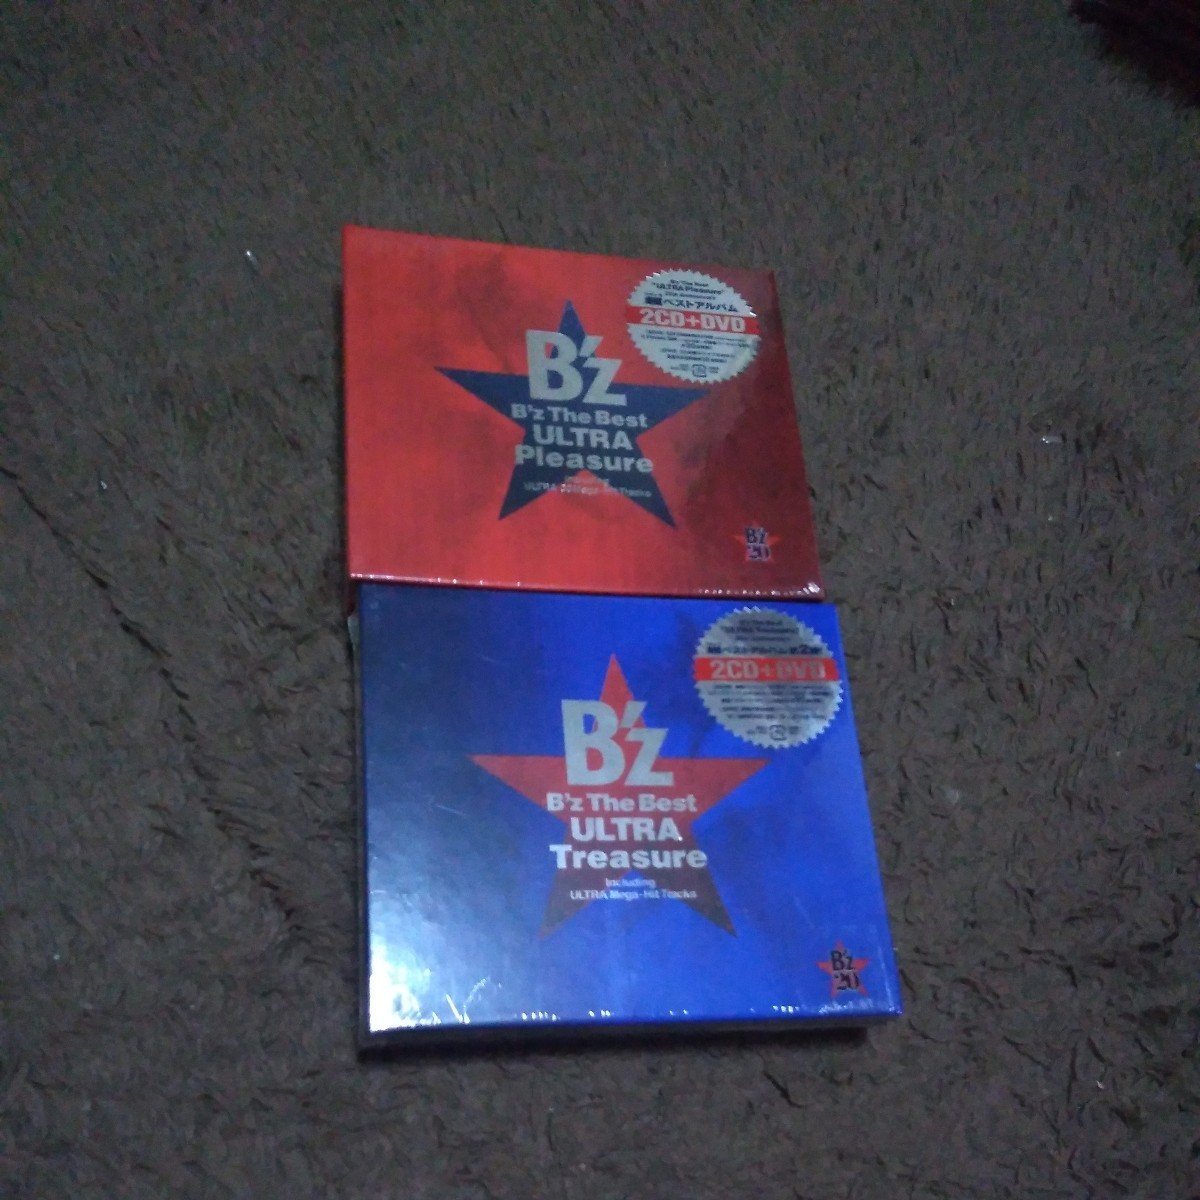 B'z The Best ULTRA Pleasure 2CD+DVD ULTRA Treasure 2CD+DVD ベスト